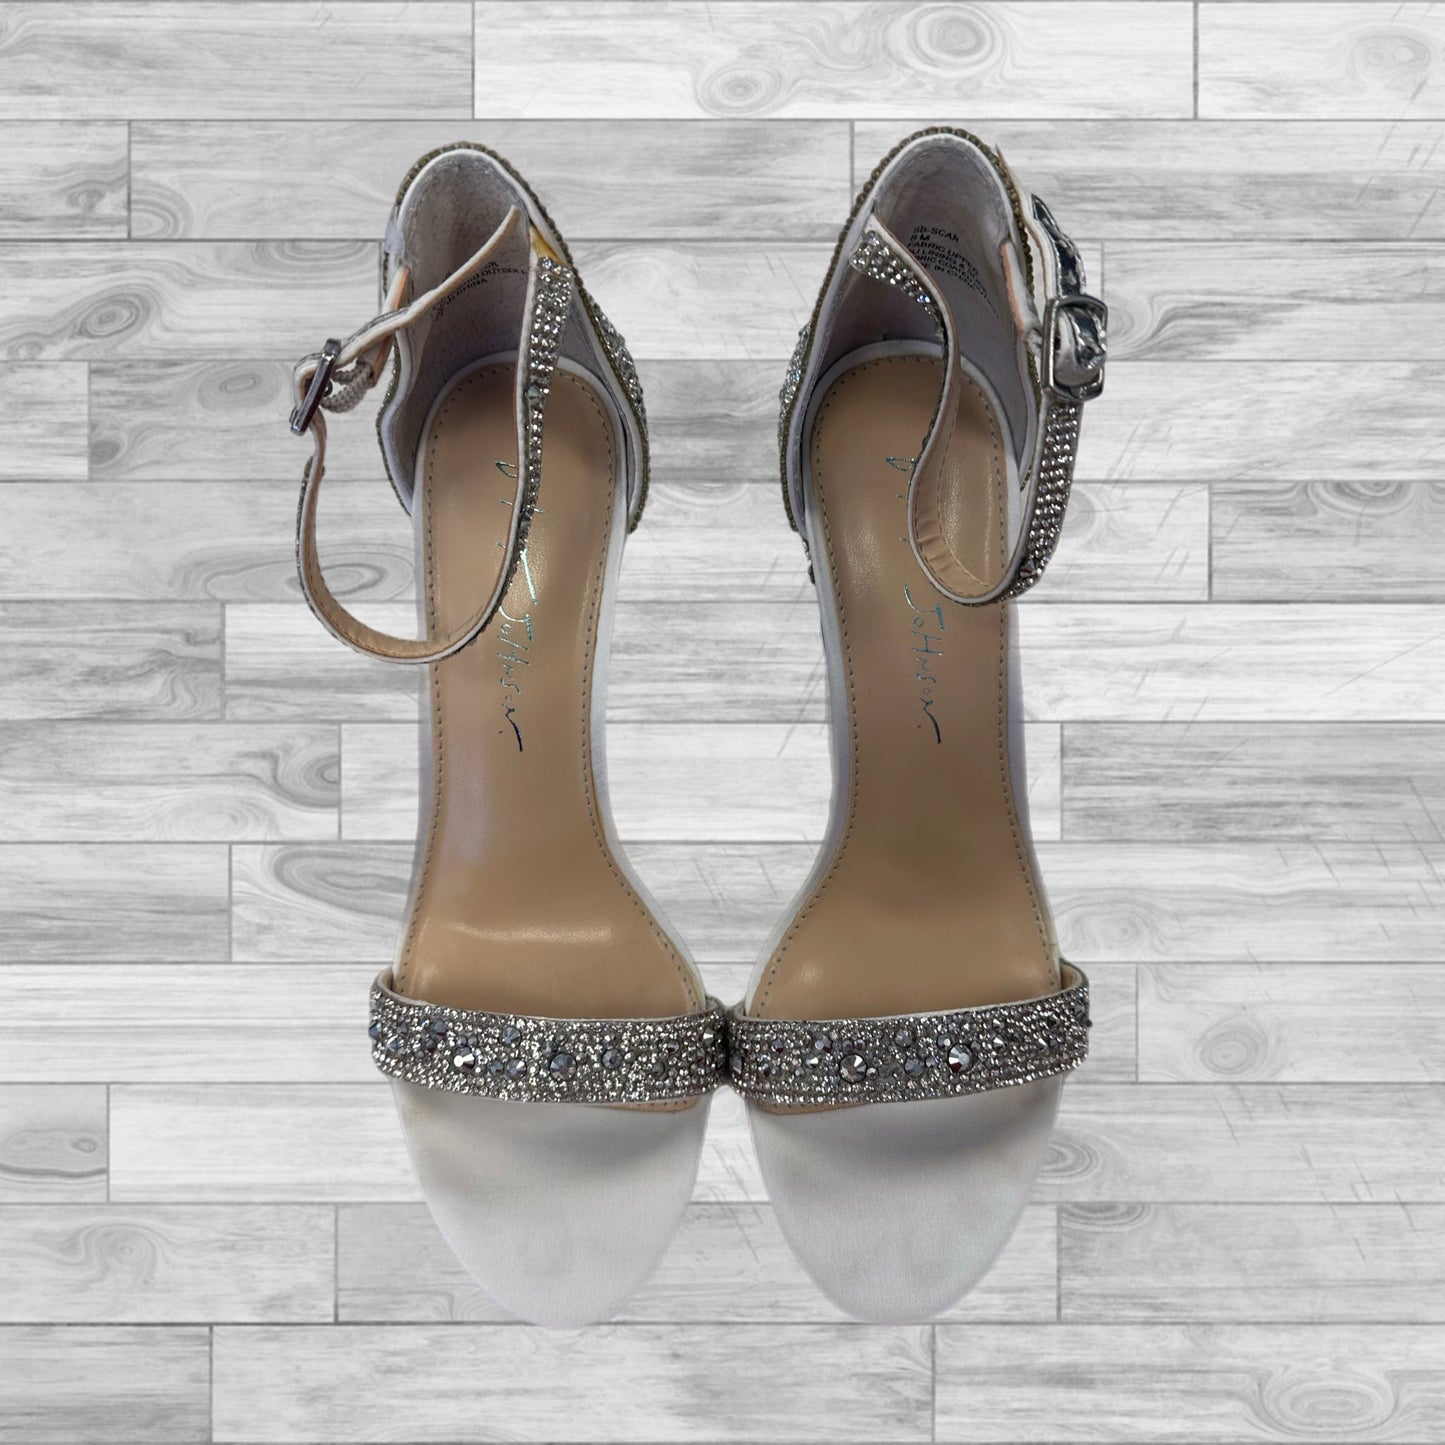 Silver & White Shoes Heels Kitten Betsey Johnson, Size 8